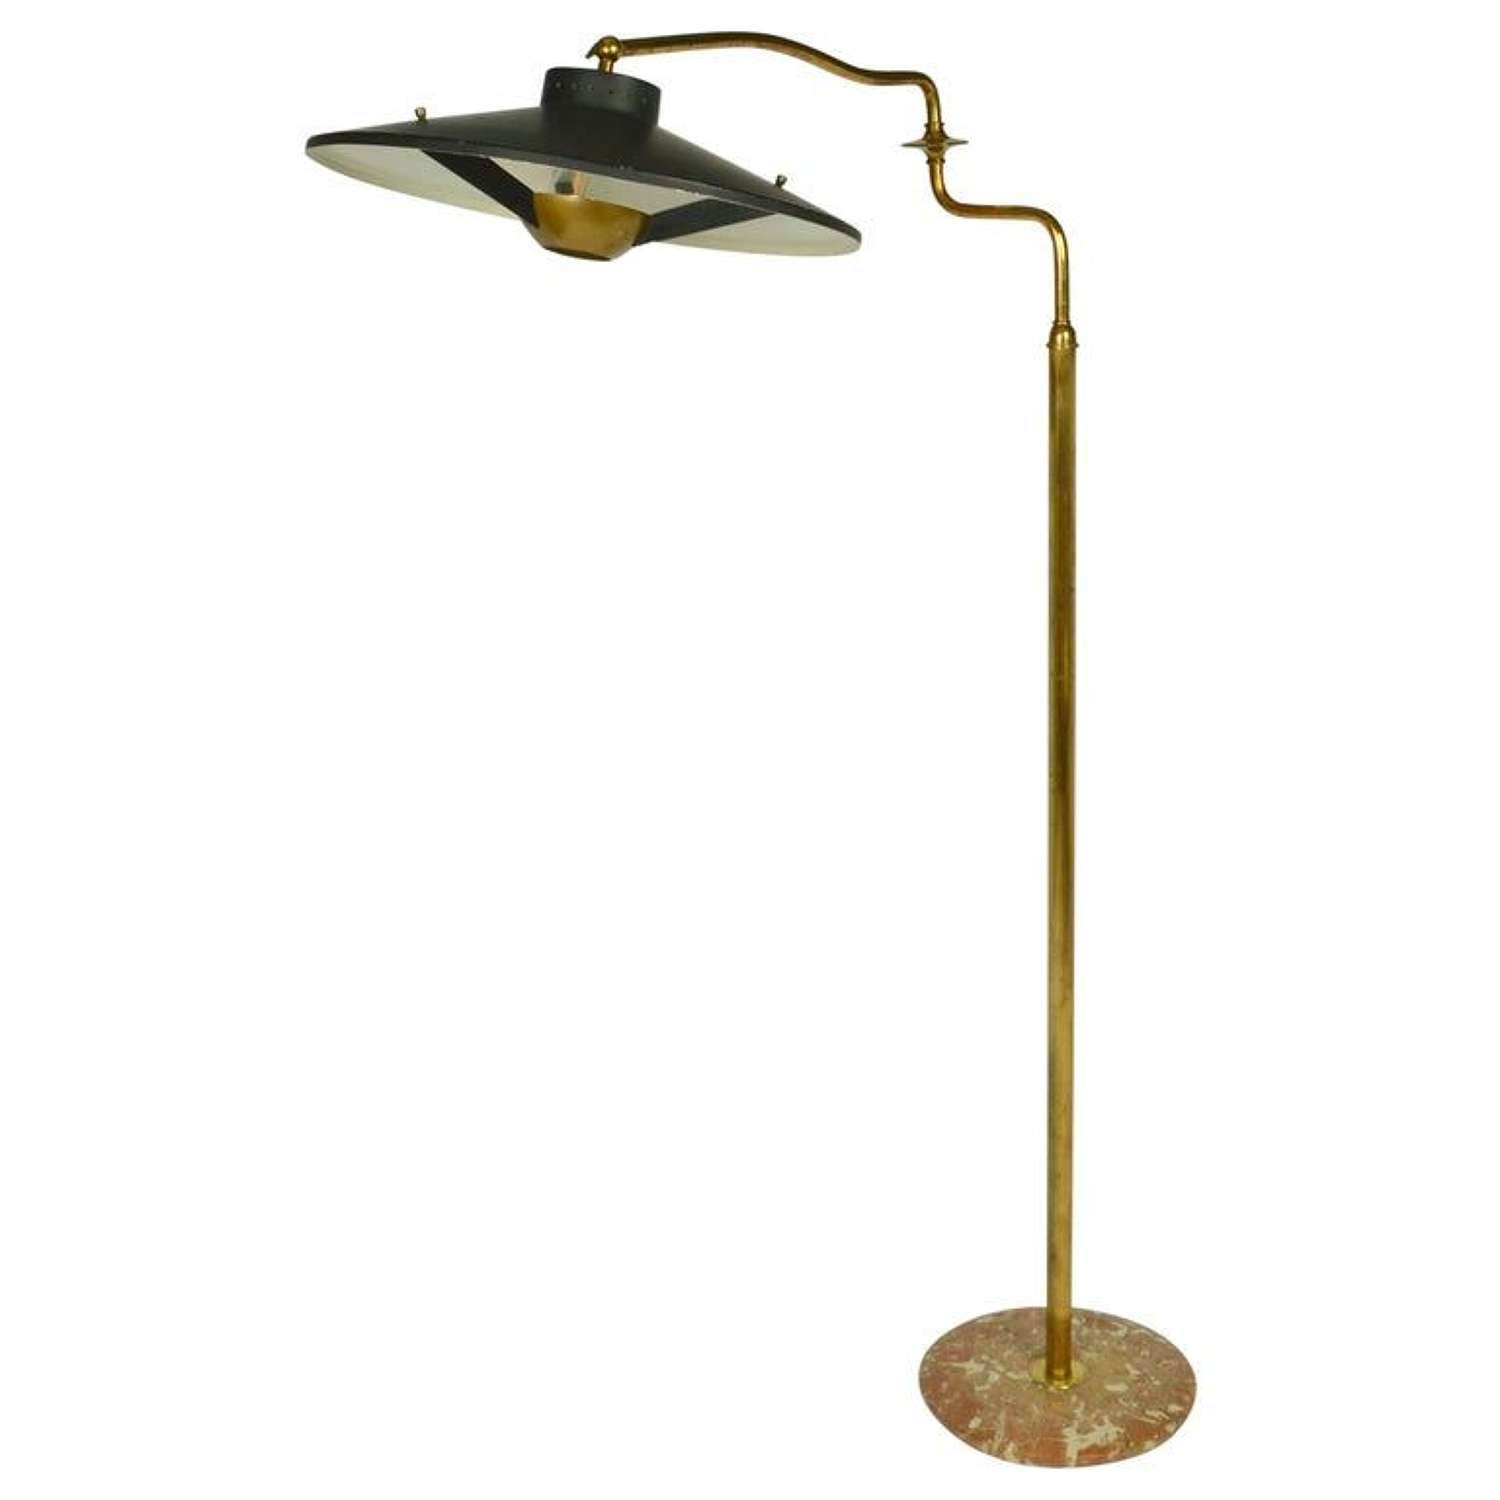 Italian Swing Arm Brass Floor Lamp, Black Shade, 1950's Stilnovo Style